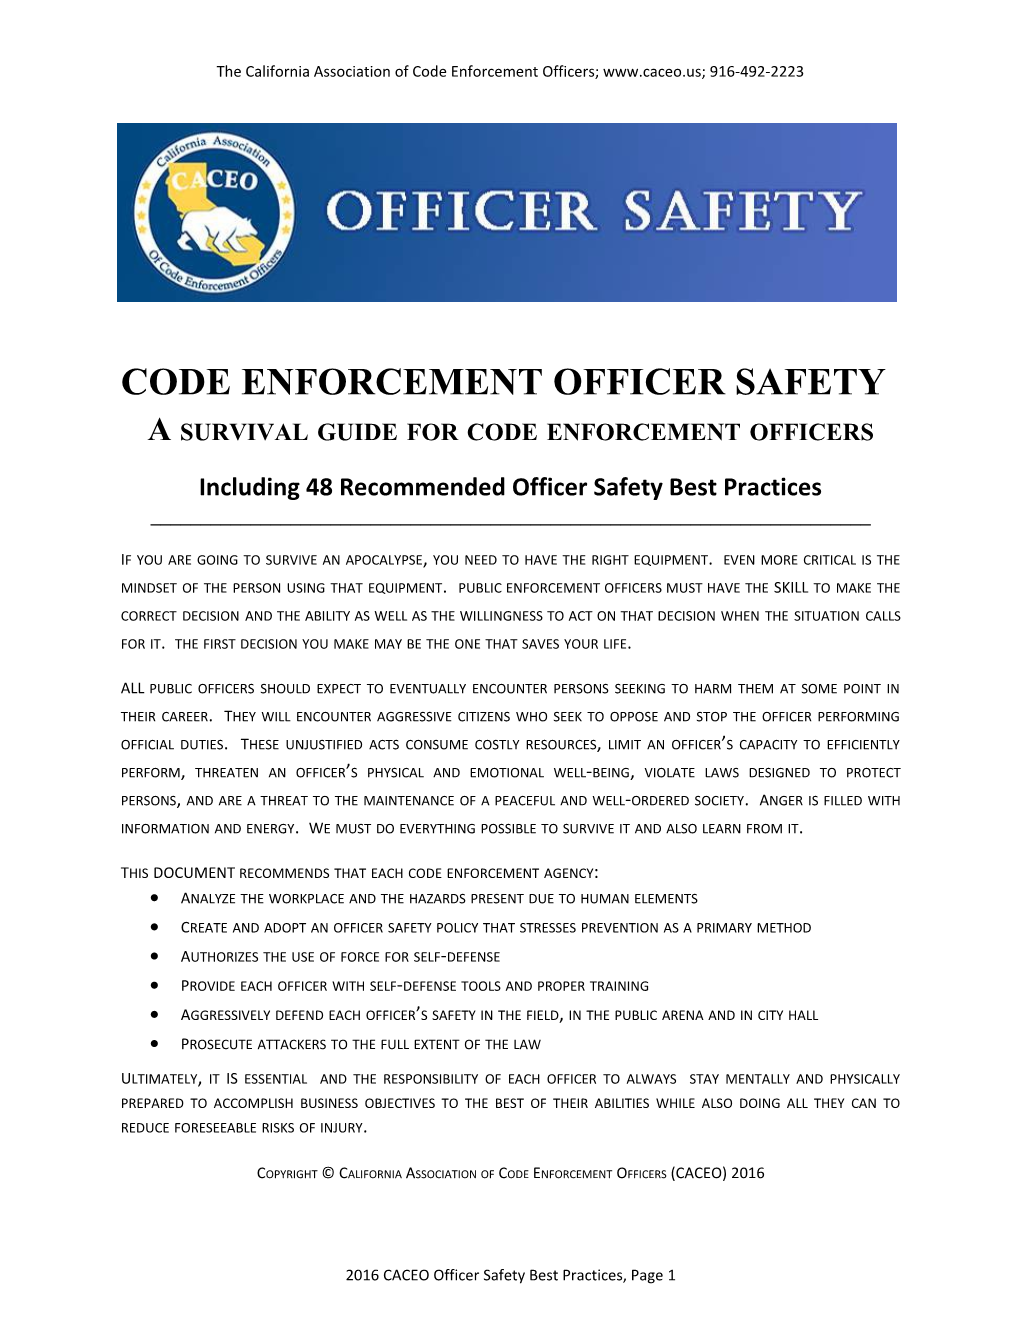 Code Enforcement Officer Safety